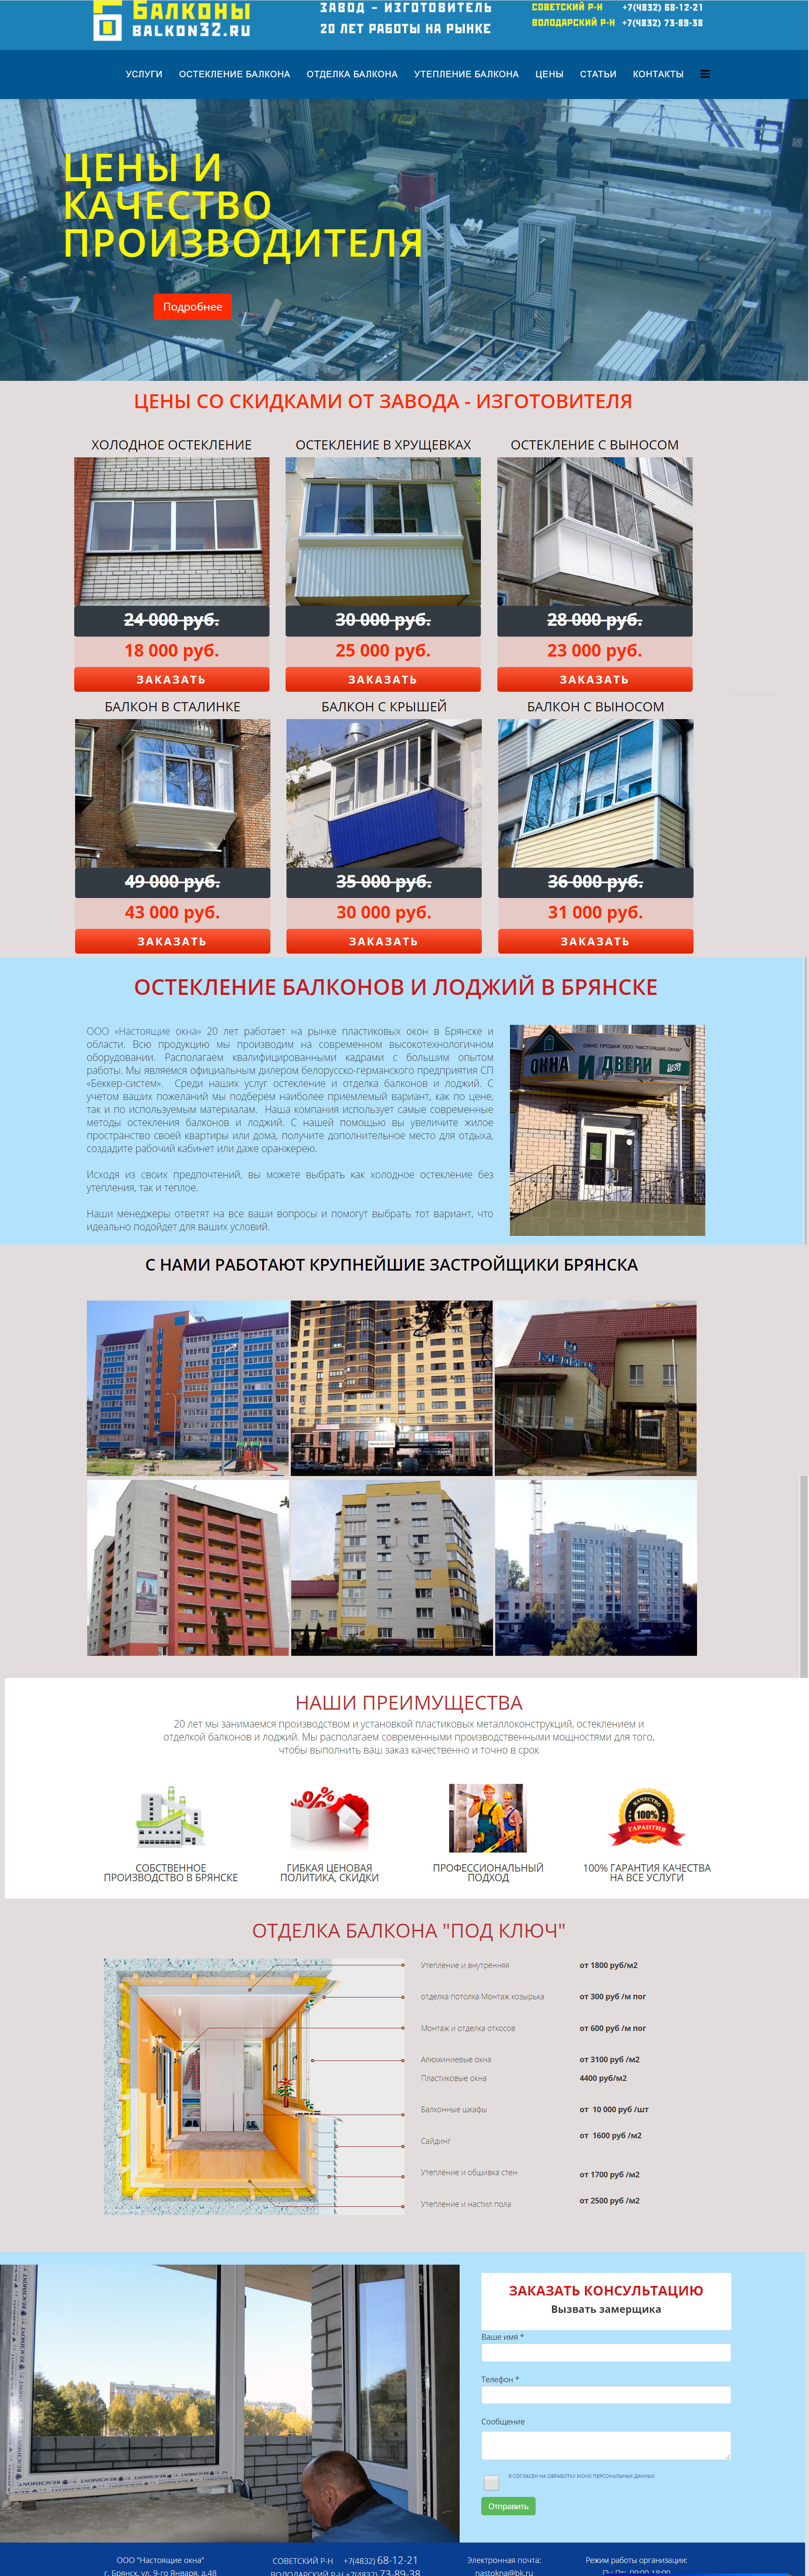 сайт-визитка веб компании ТЕКСТ32 услуги-остекление балконов и лоджий в Брянске